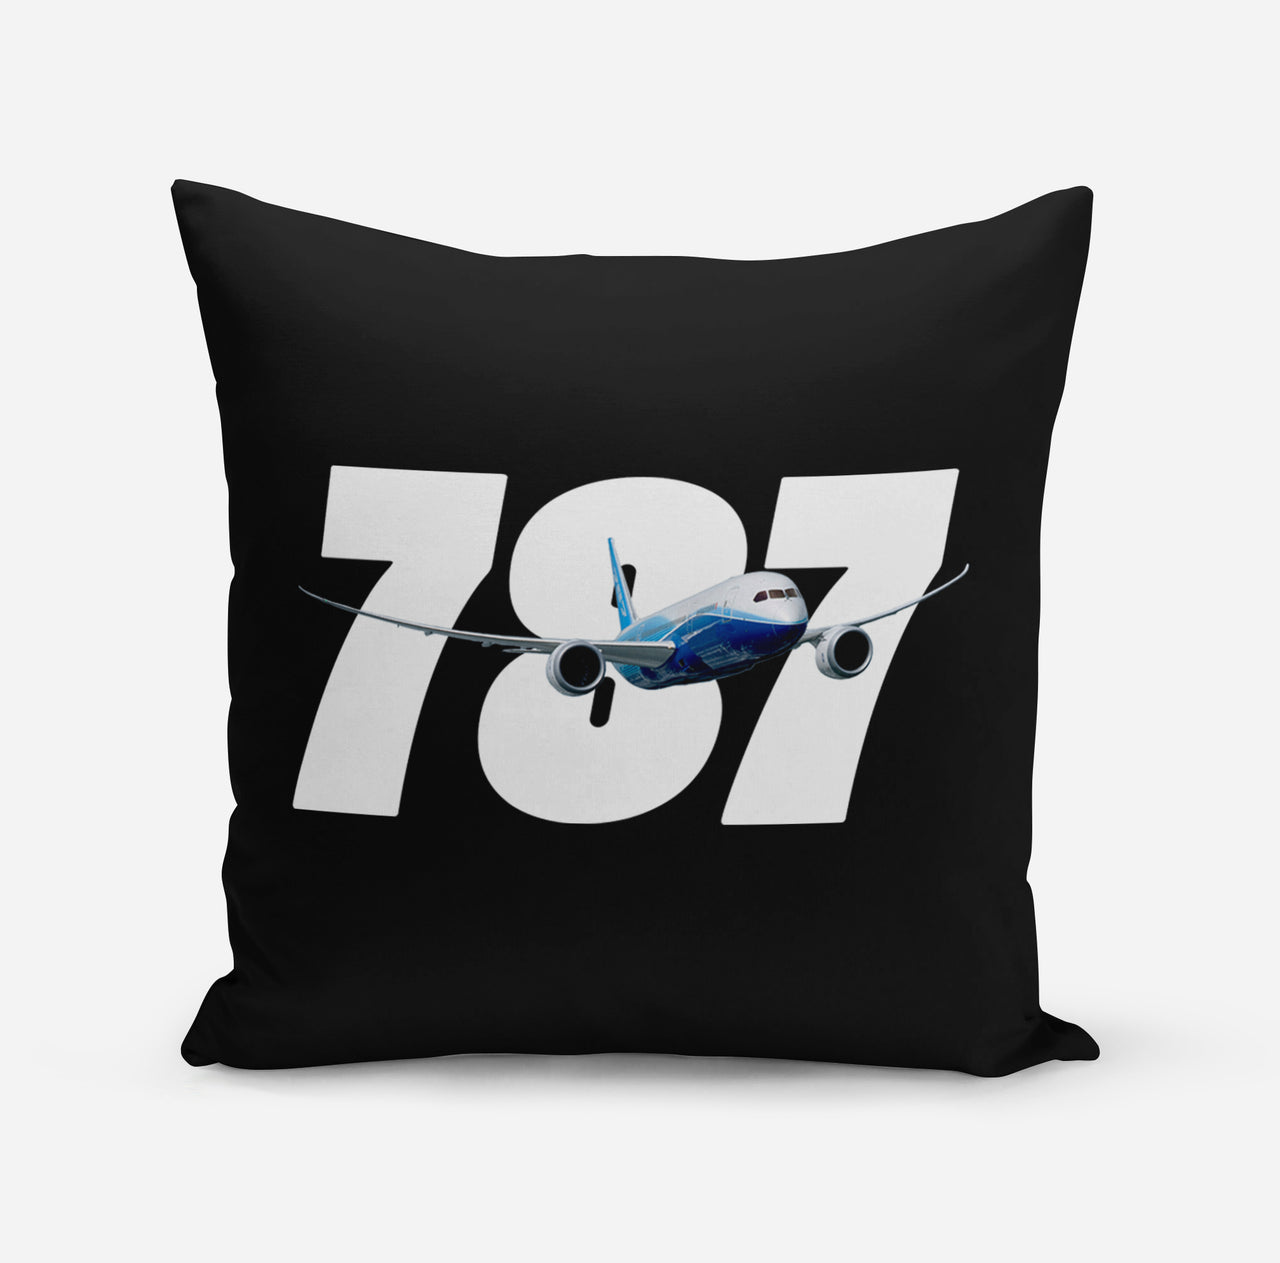 Super Boeing 787 Designed Pillows